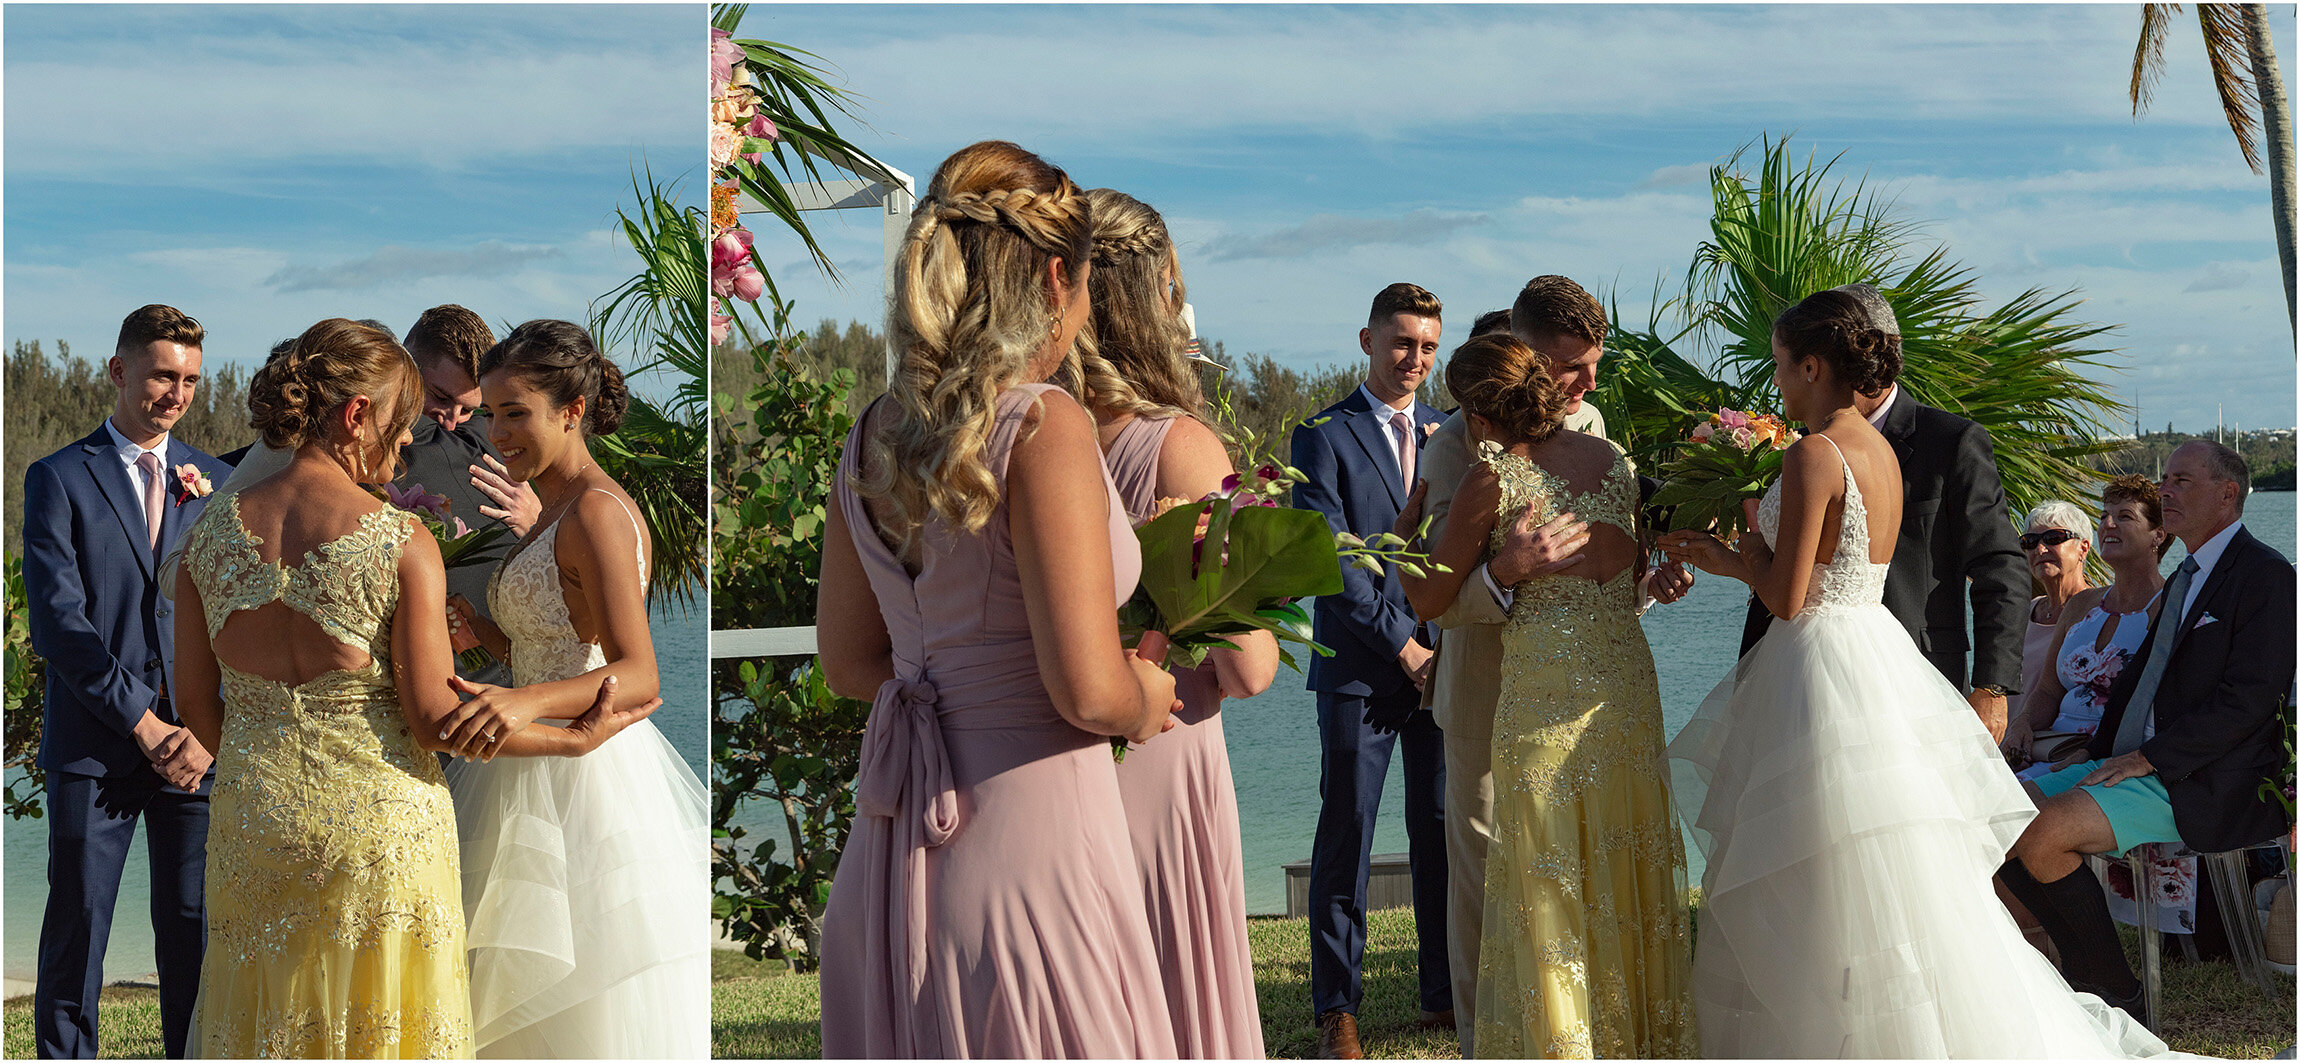 Hawkins Island Bermuda-Wedding-©FianderFoto_057.jpg